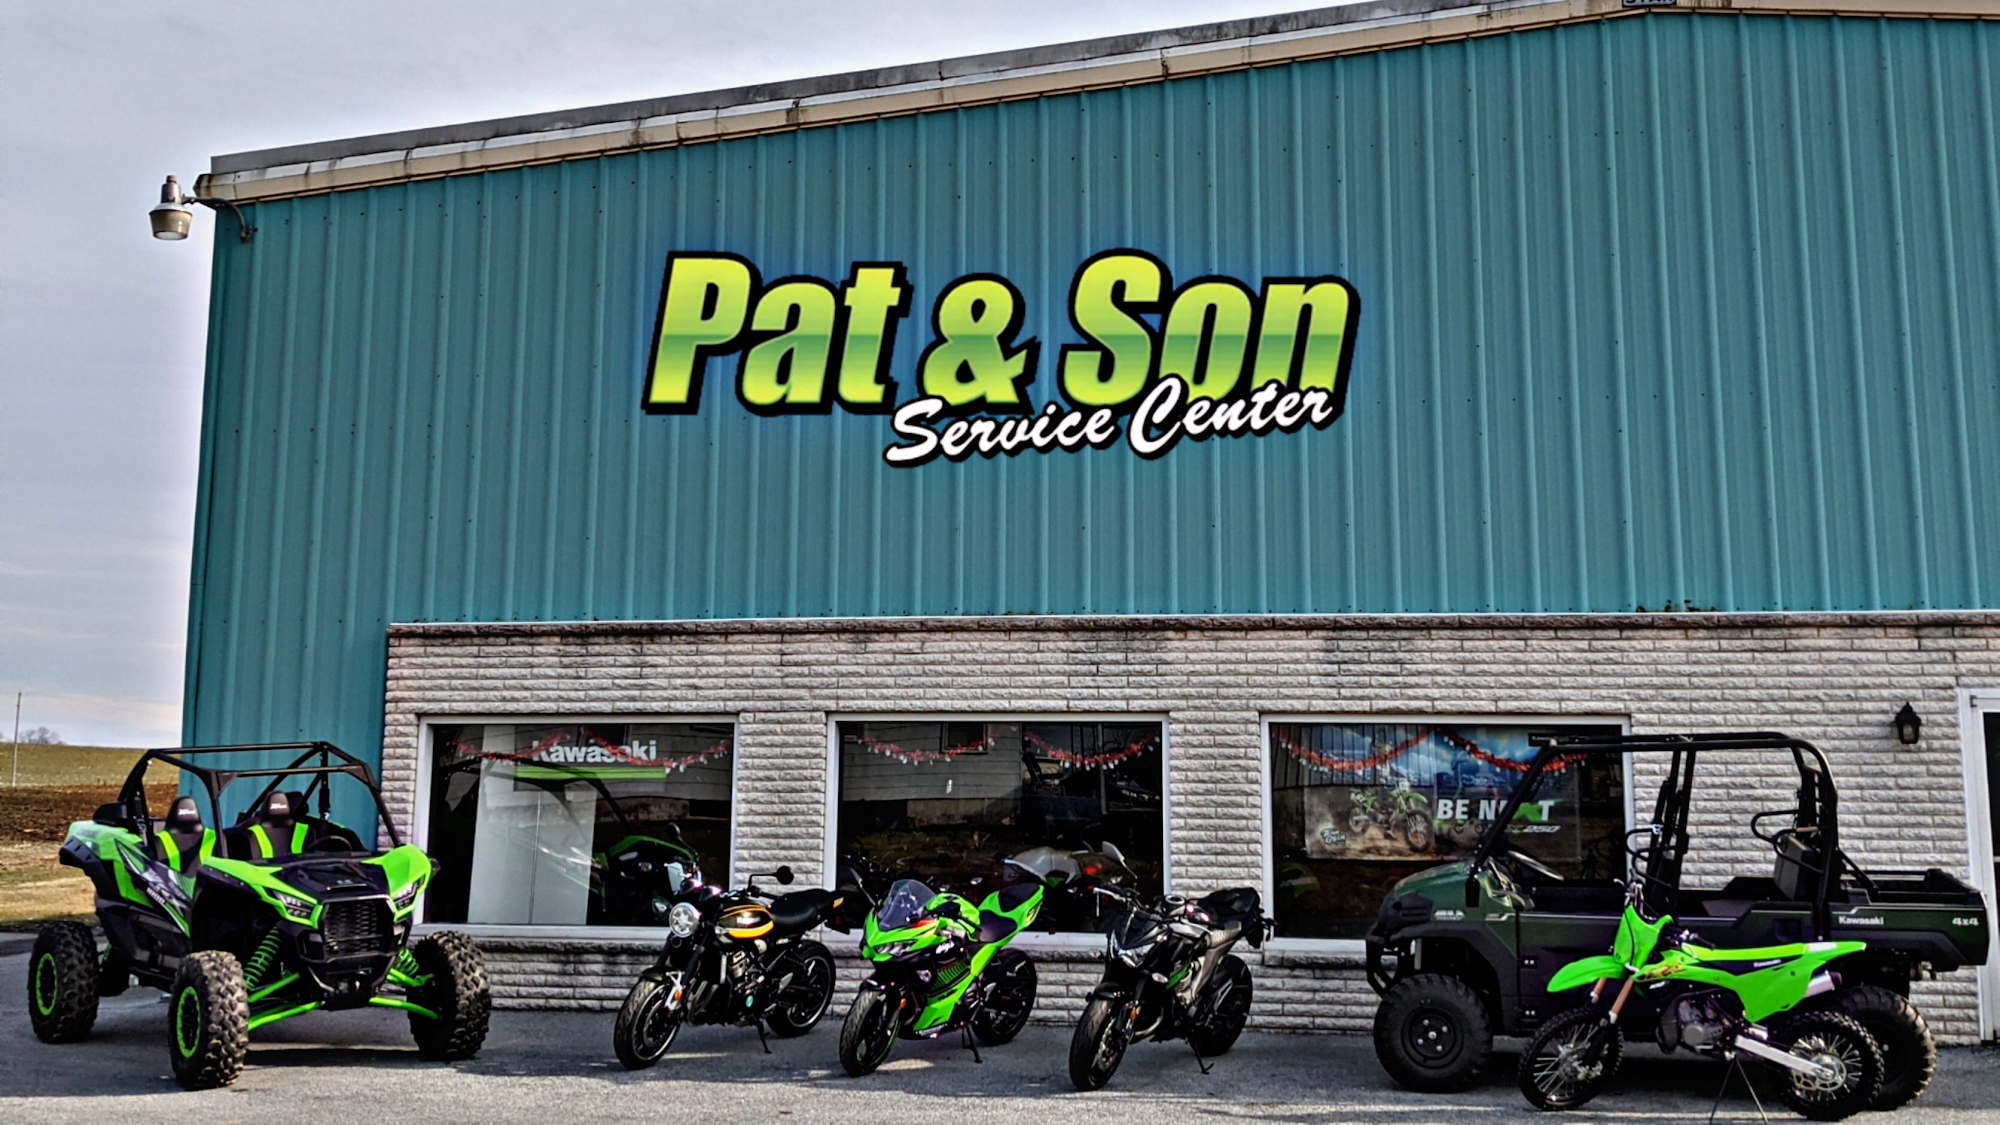 Pat & Son Service Center